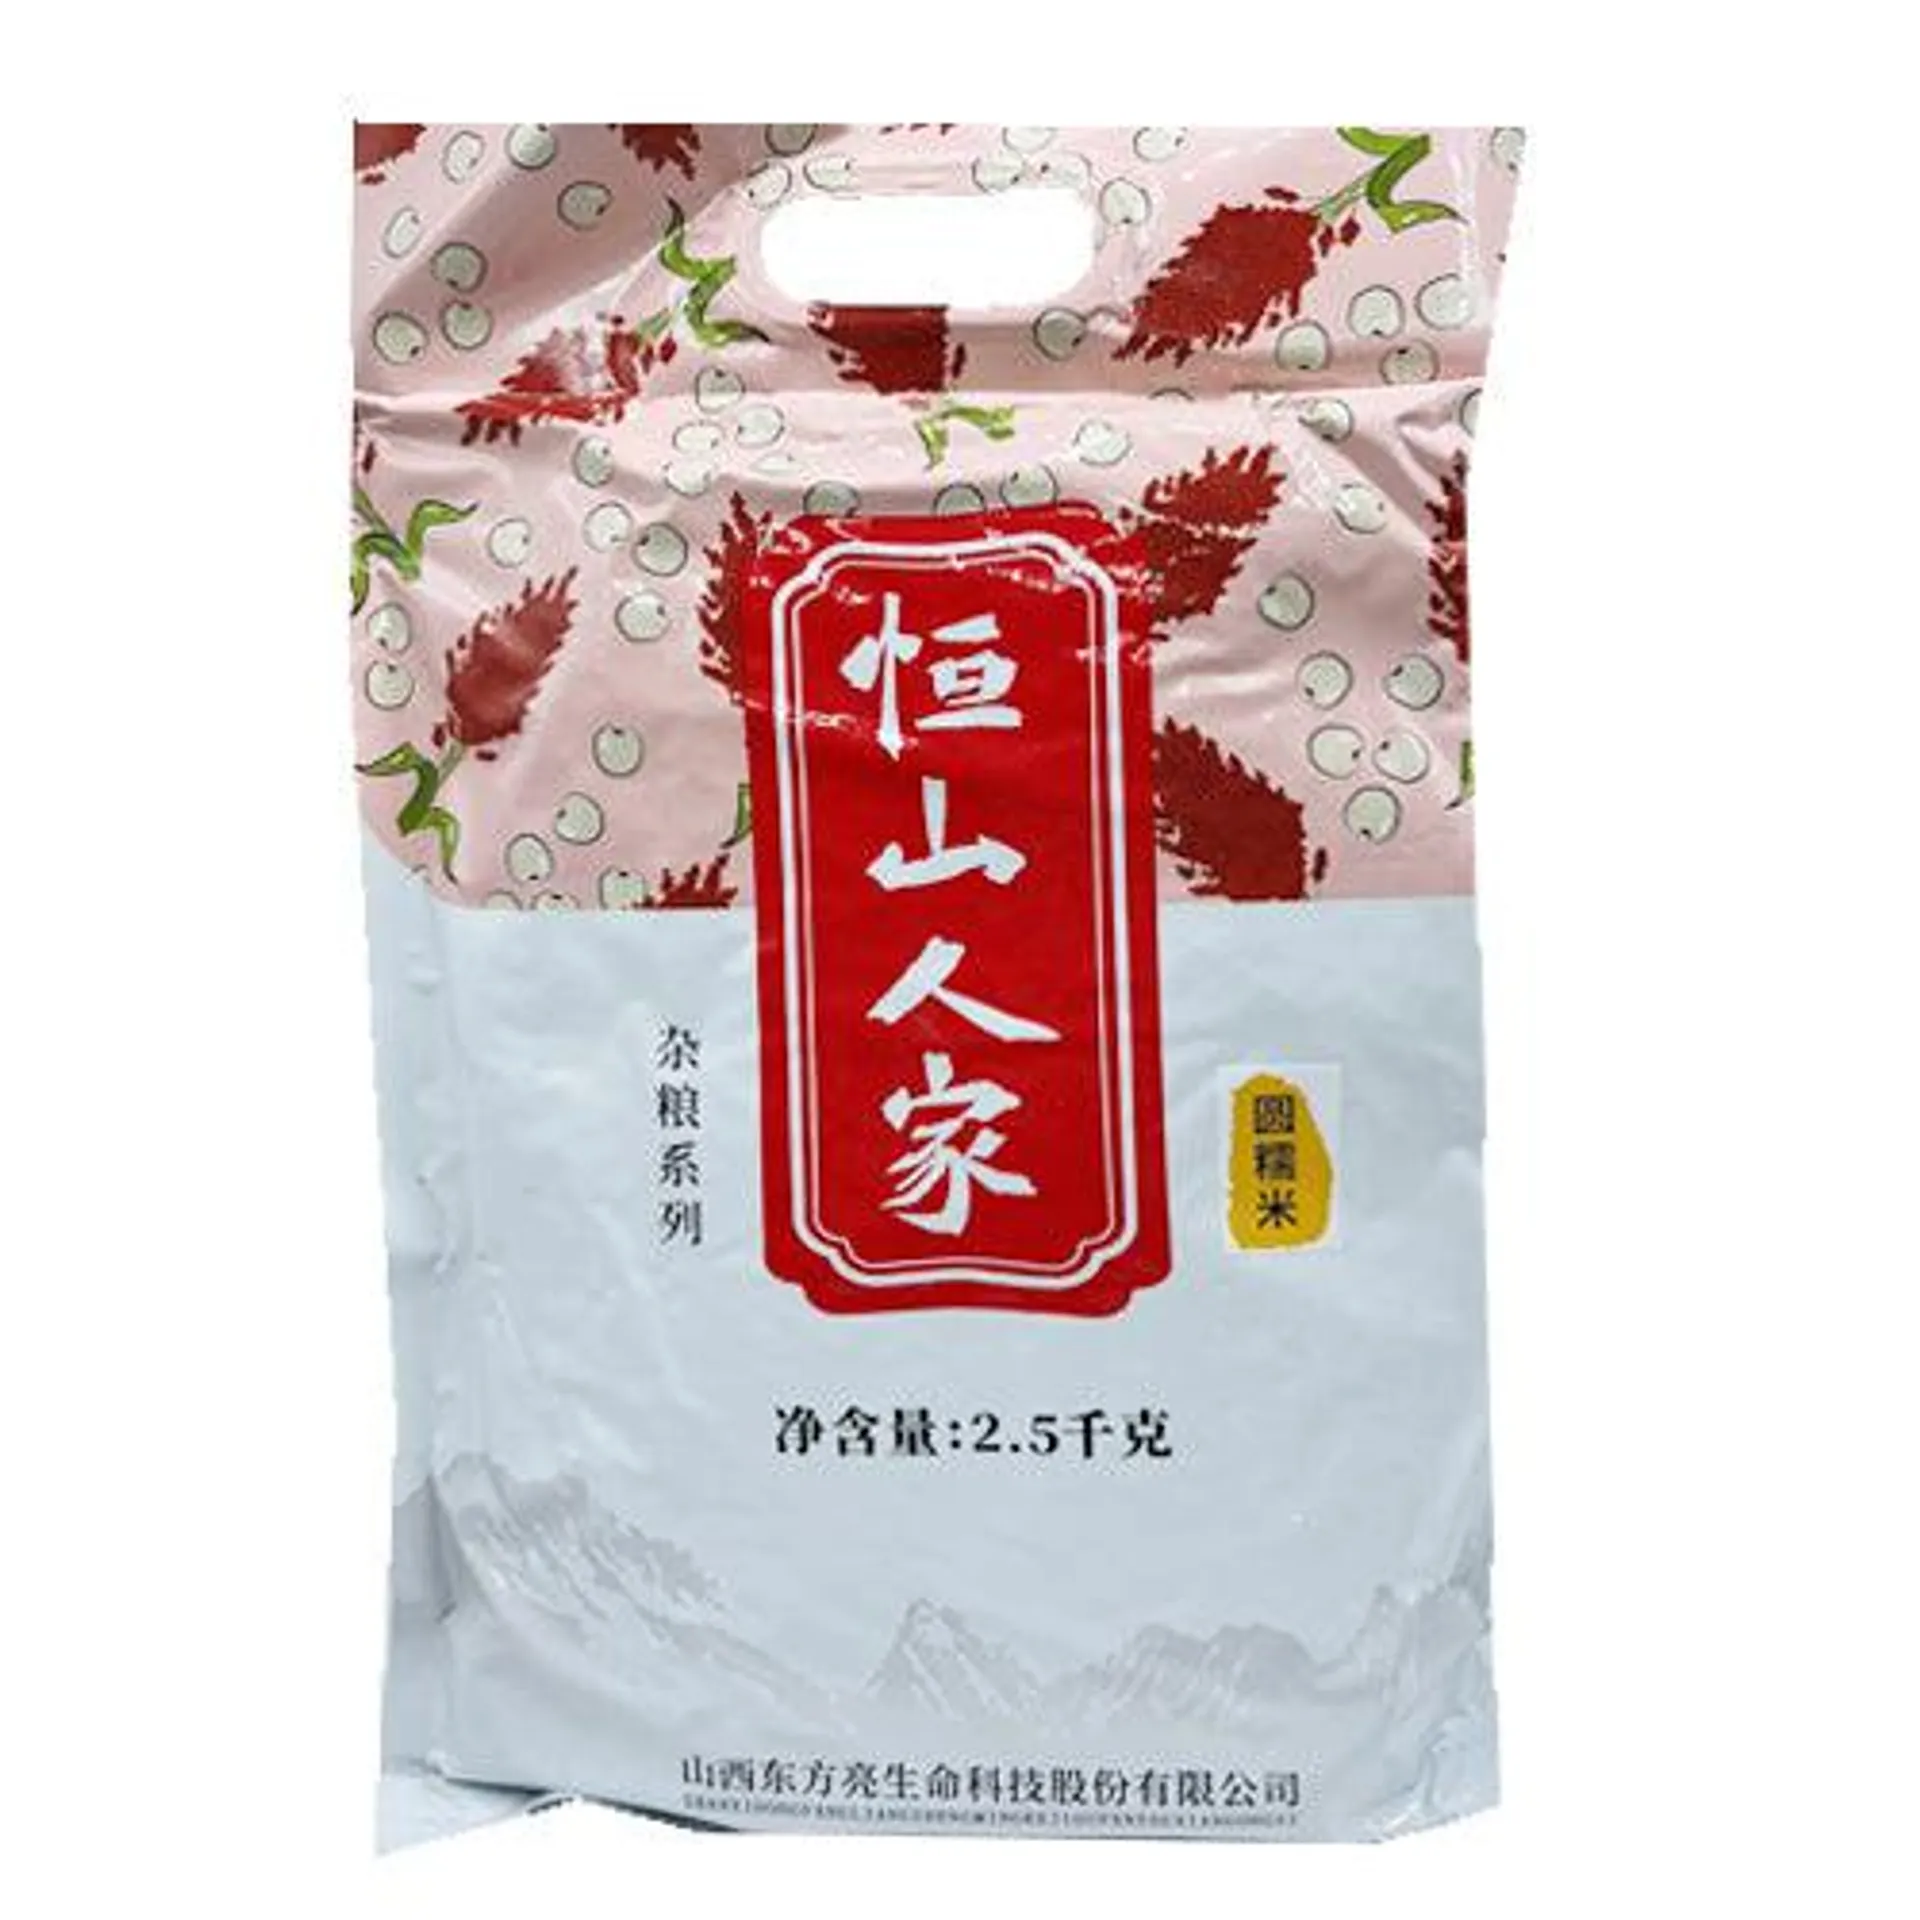 Hengshan Glutinous Rice 2.5KG